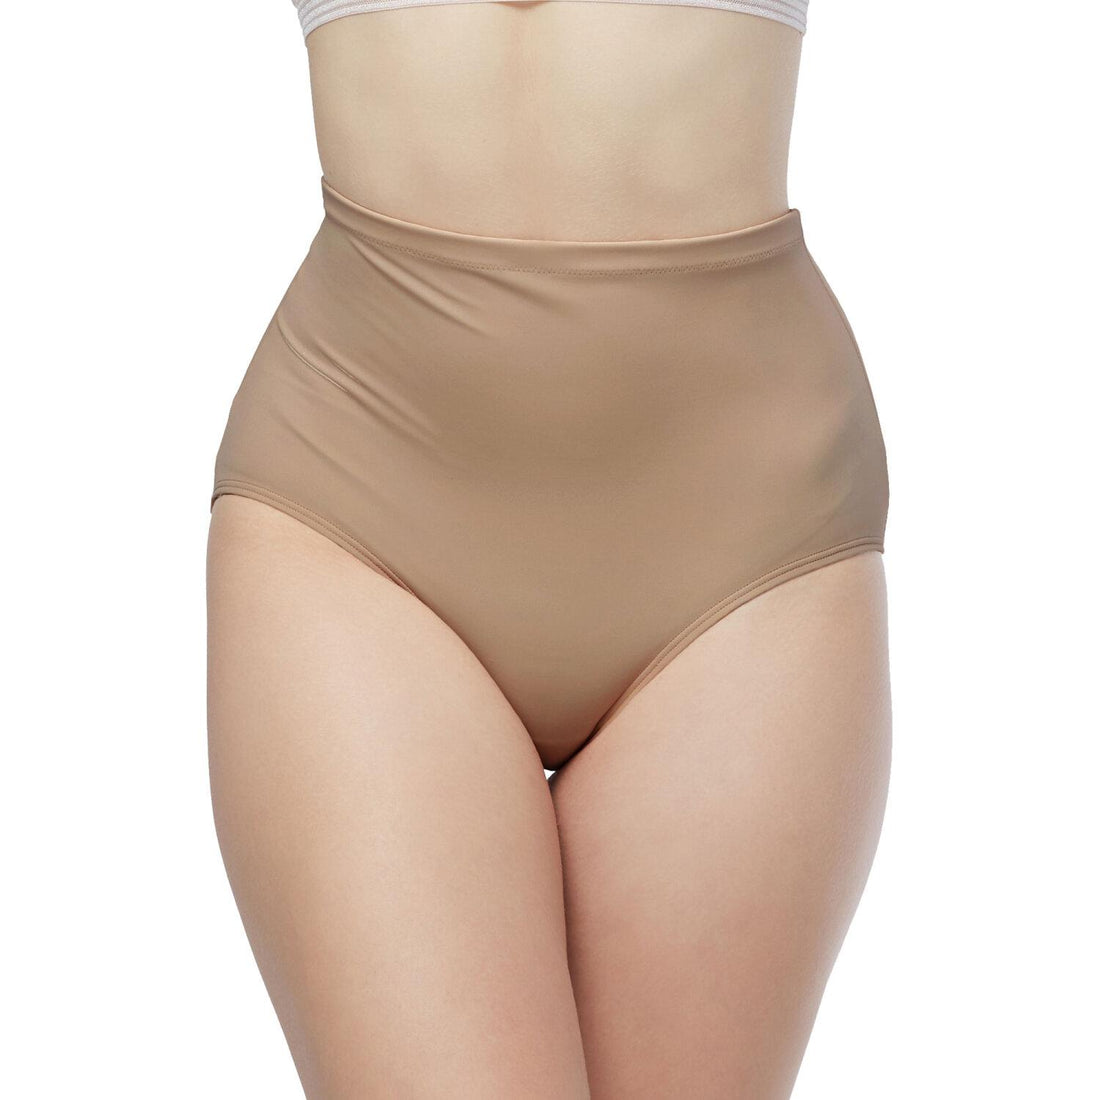 Wacoal High Waist Panty Wacoal high-waisted belly-fitting panties, model WU4888, set of 3 pieces, ovaltine color (OT).